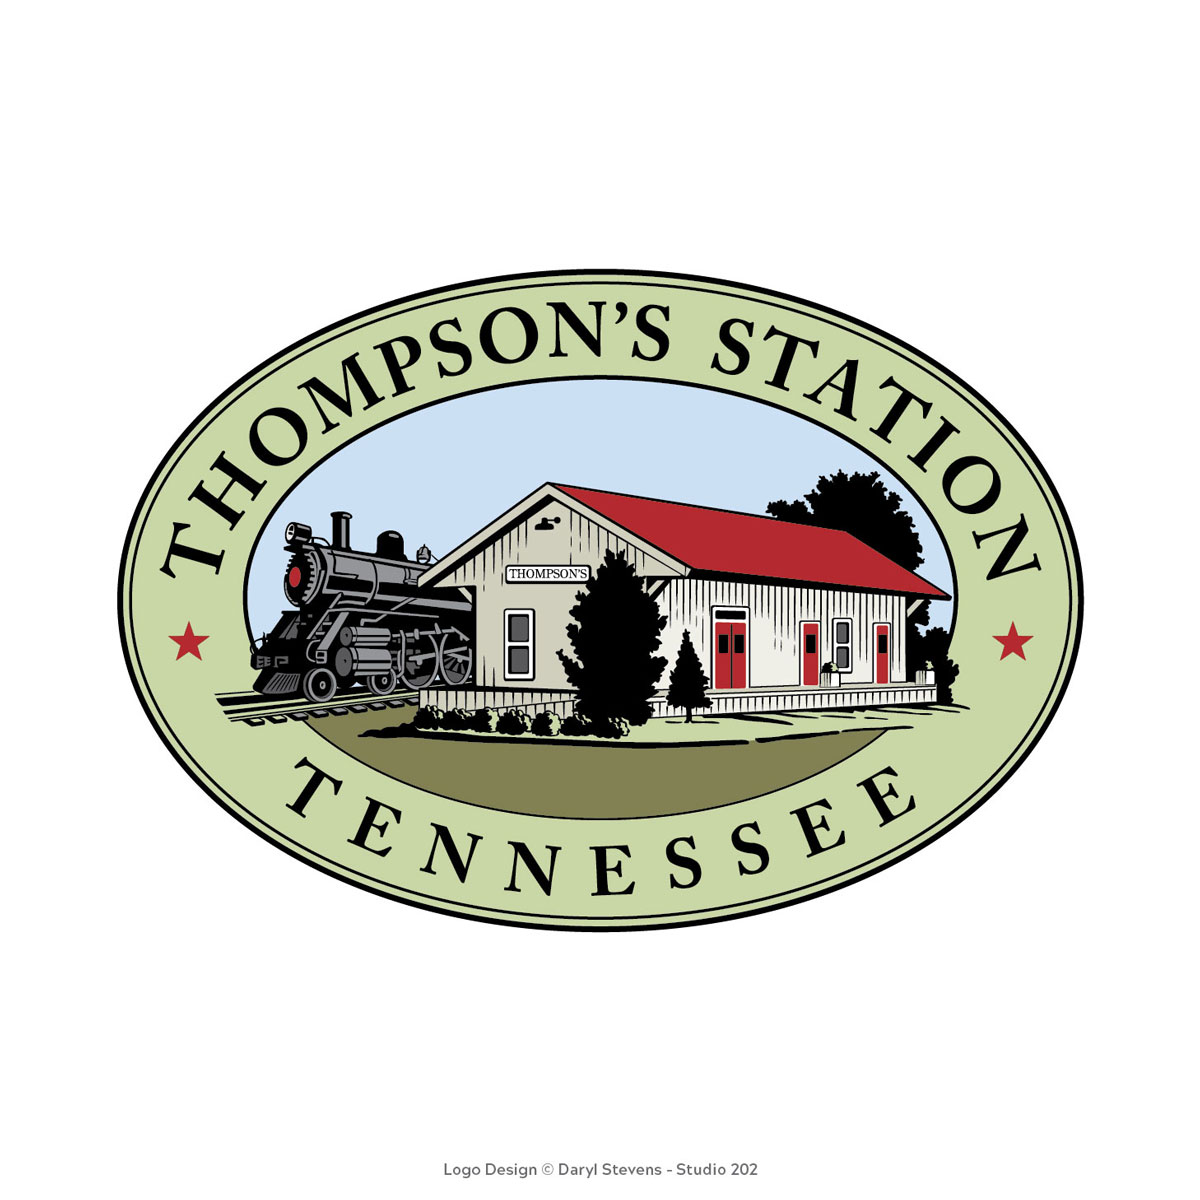 Thompsons Station town branding by Daryl Stevens